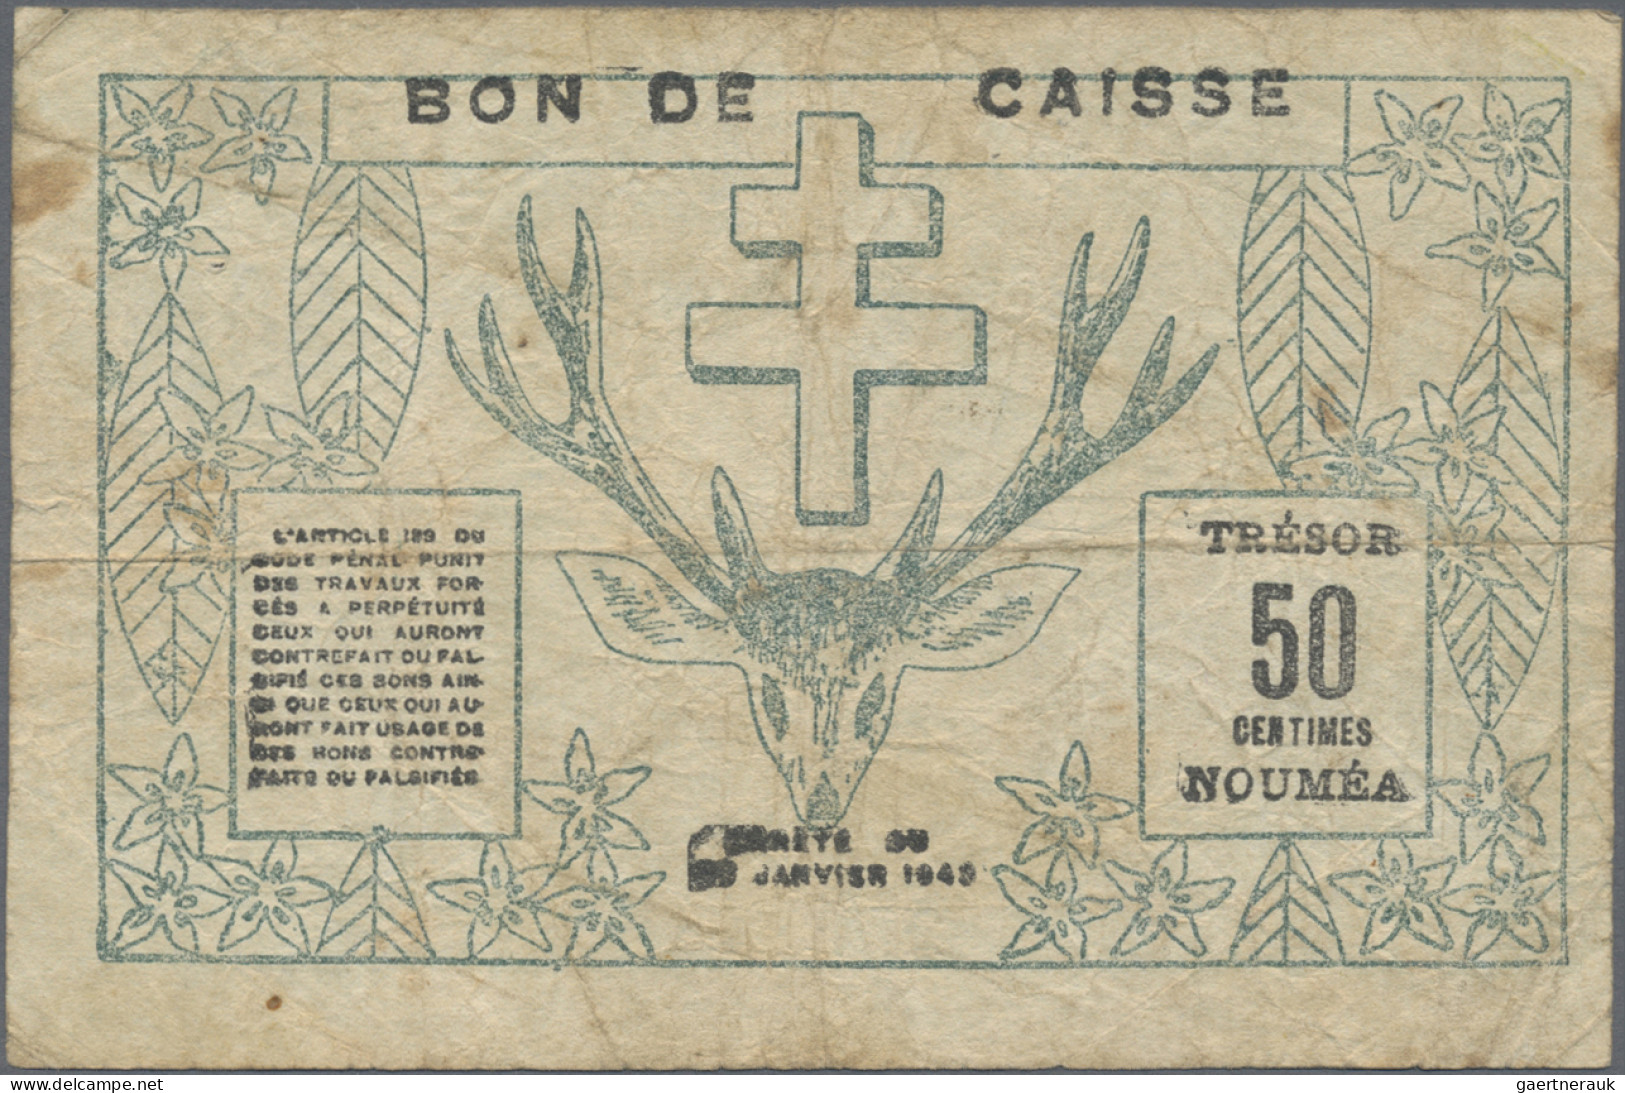 New Caledonia: Trésorerie de Nouméa, lot with 6 banknotes WW II Emergency Issues